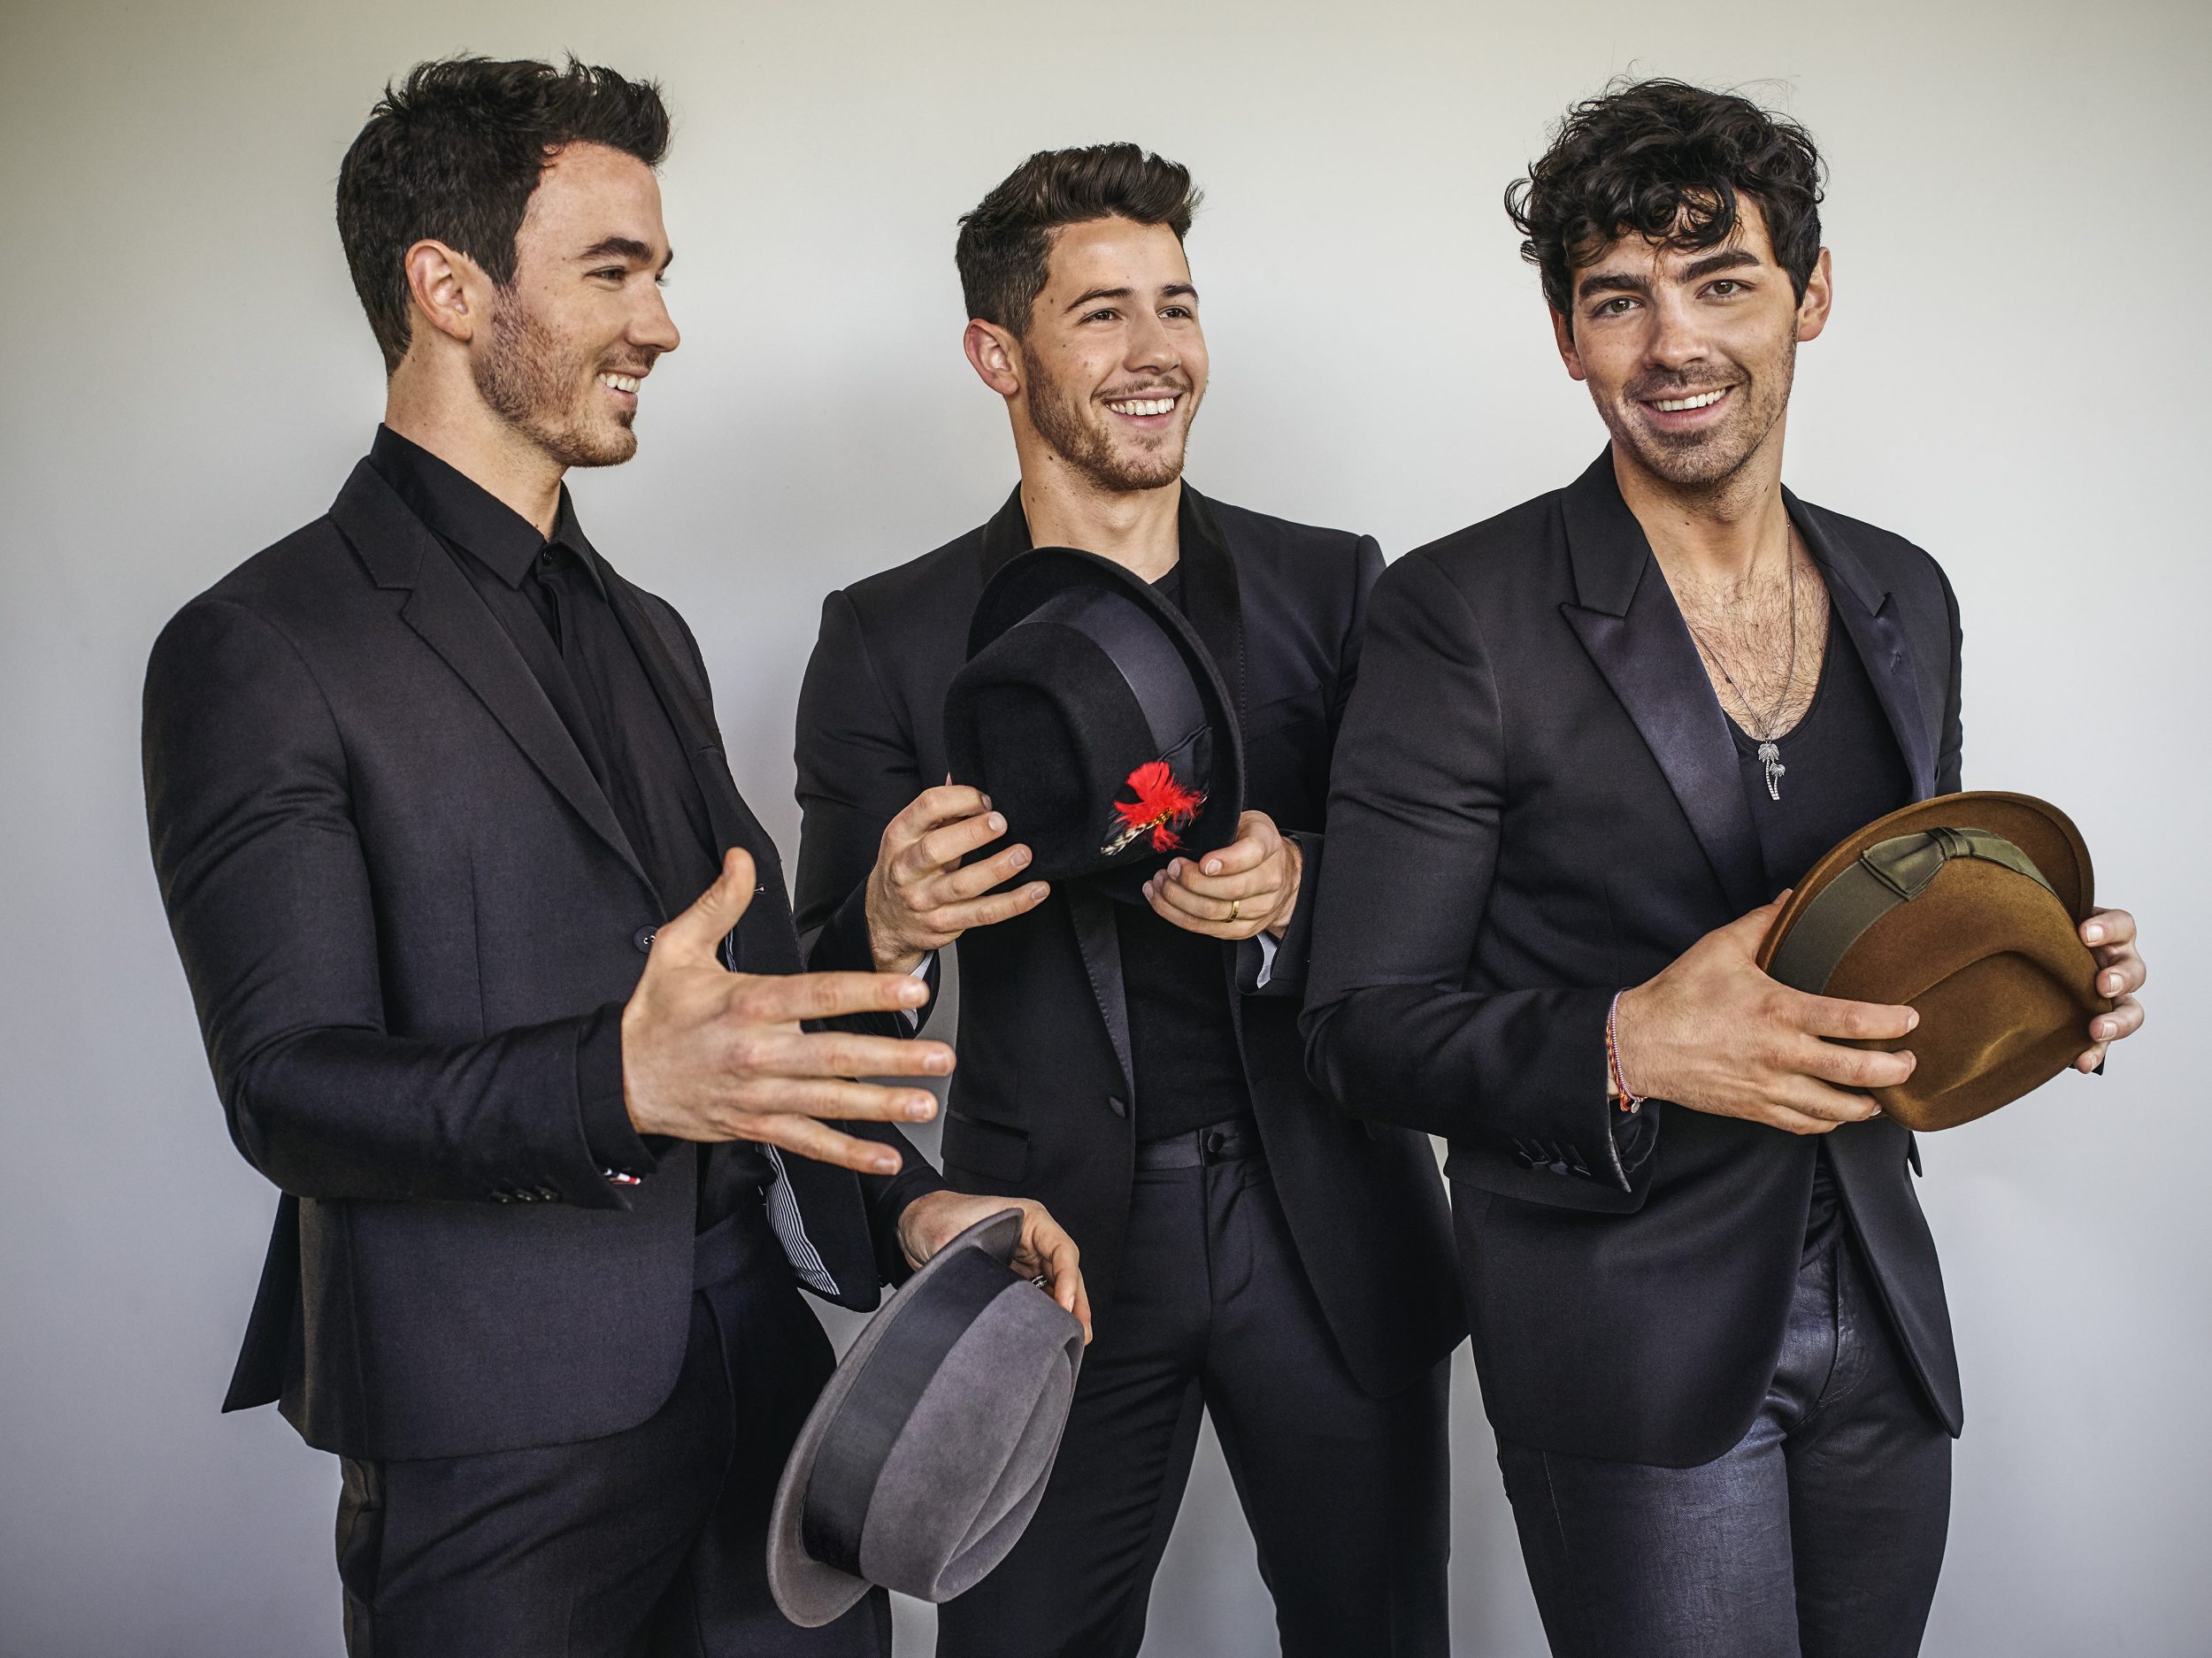 Jonas Brothers' "Happiness Begins" Dominates US Sales Race, Earns 1 On